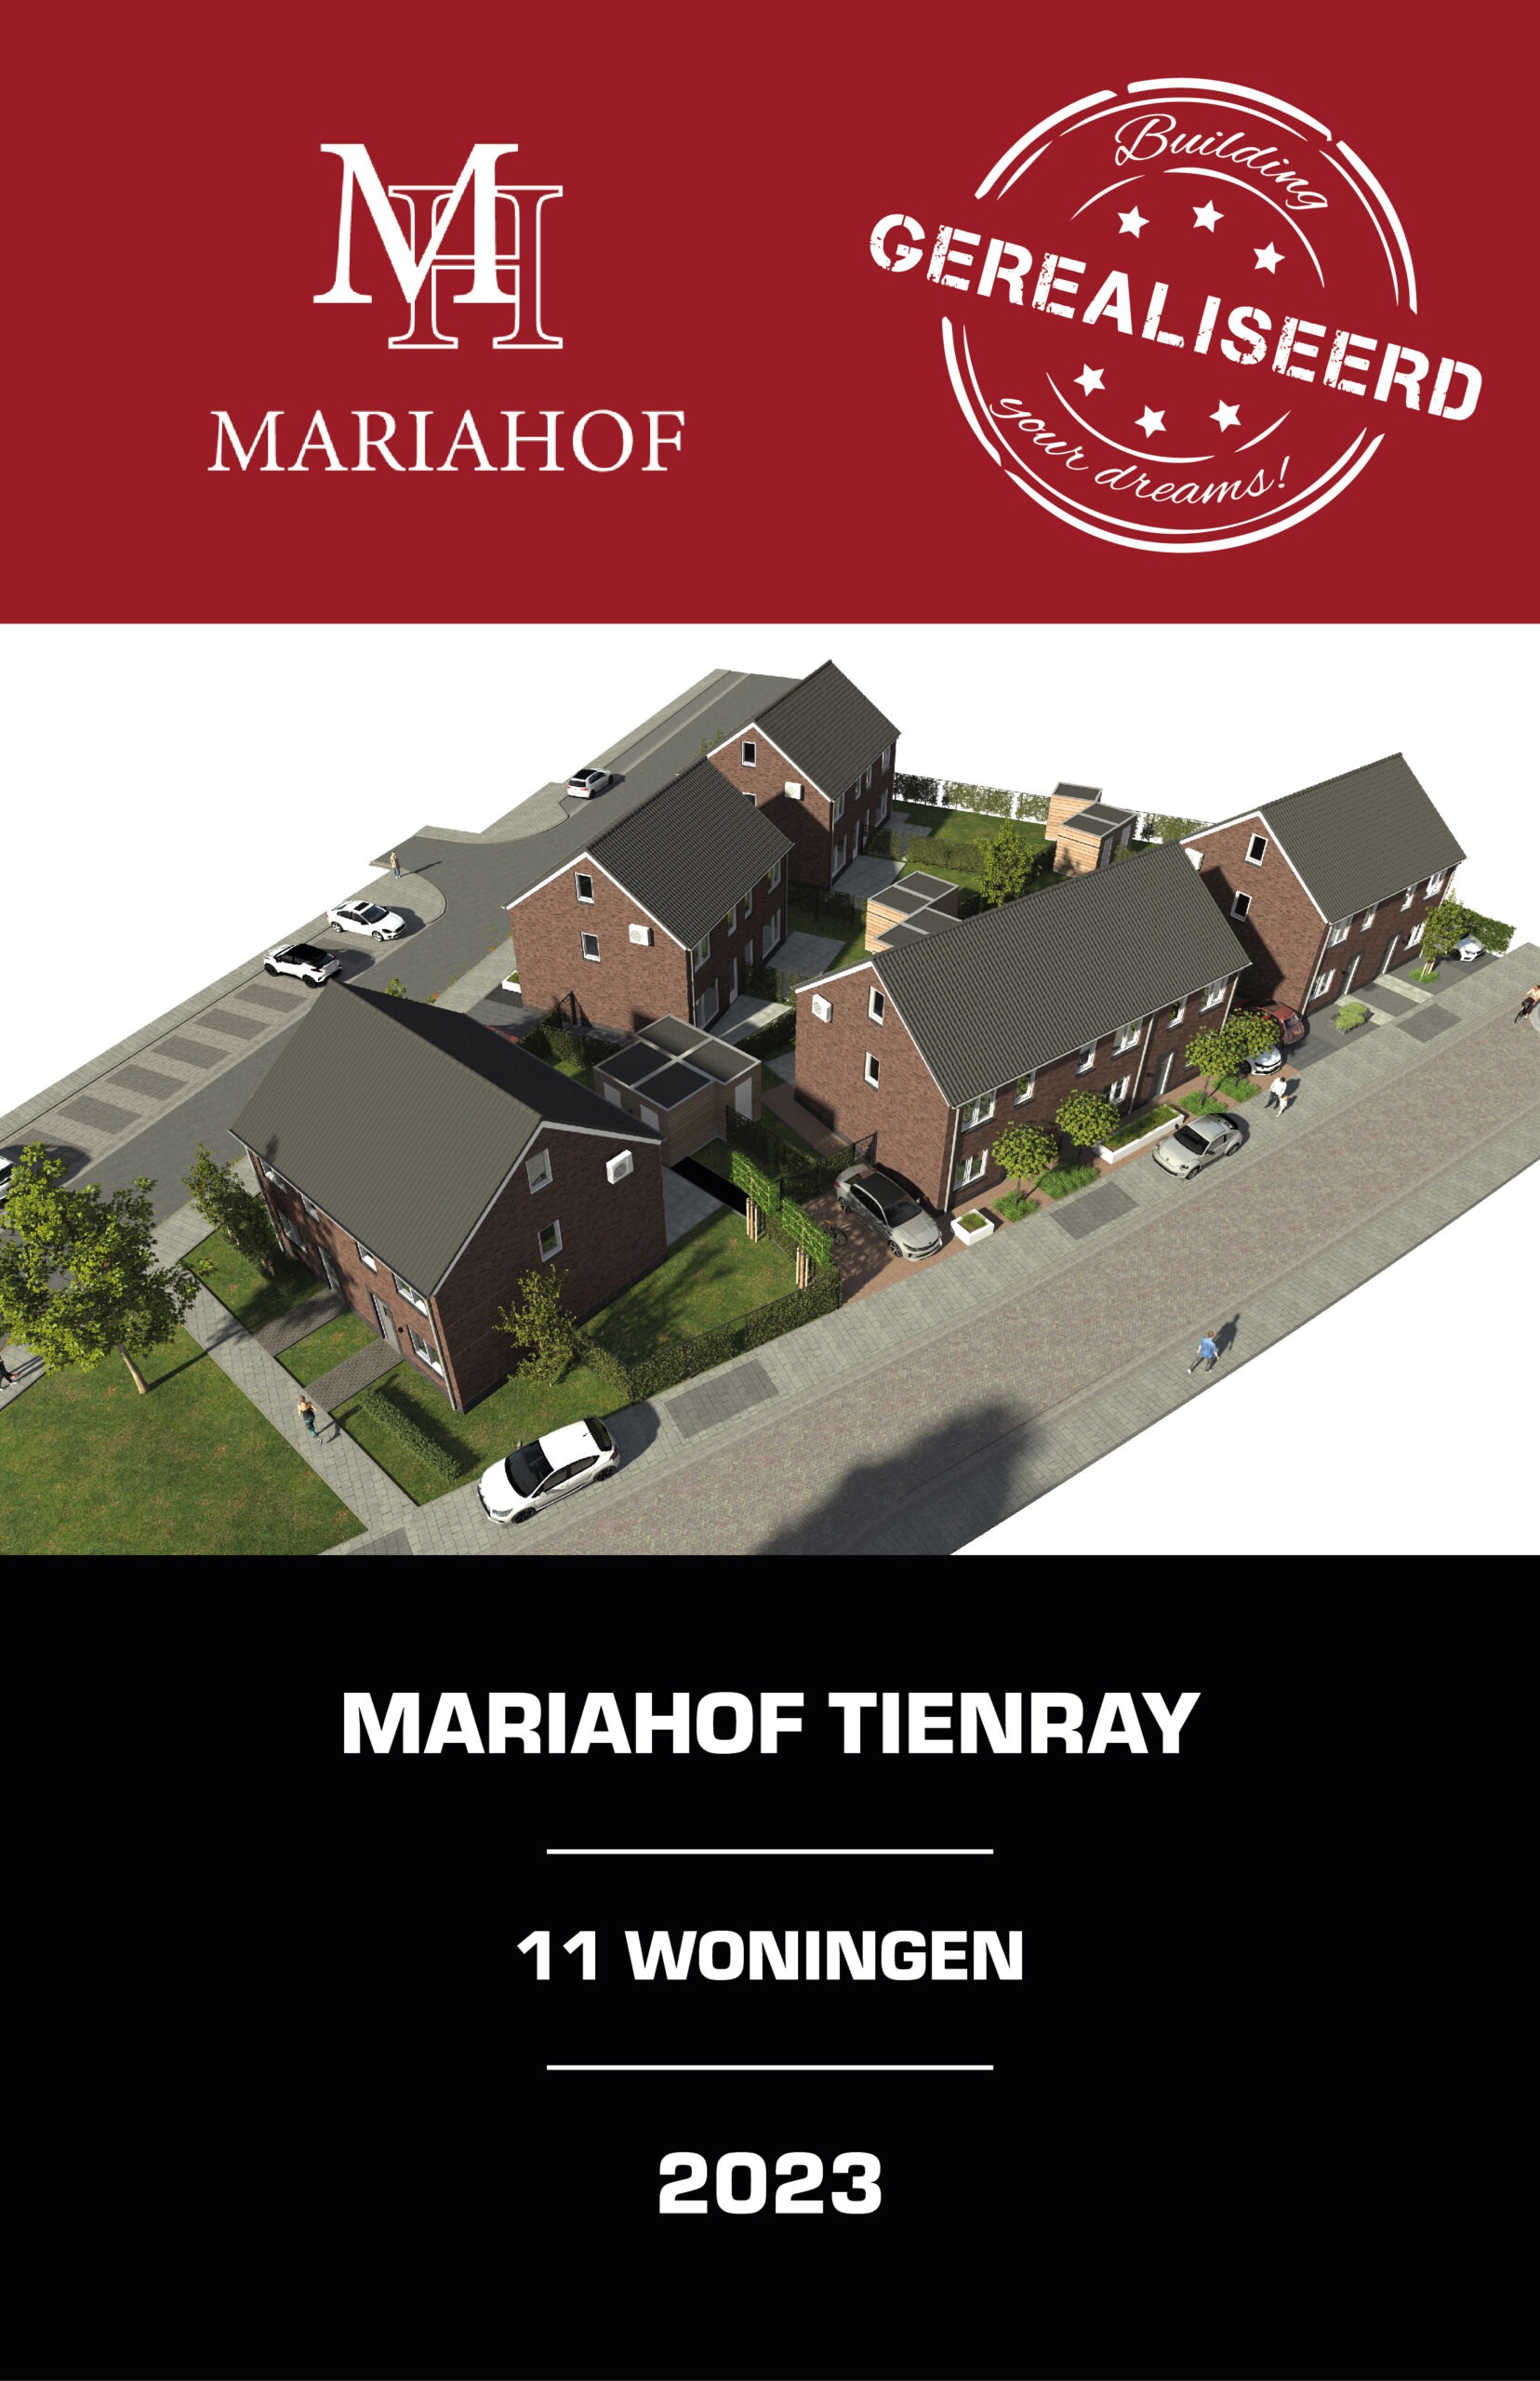 gerealiseerd display Mariahof Tienray 16x9